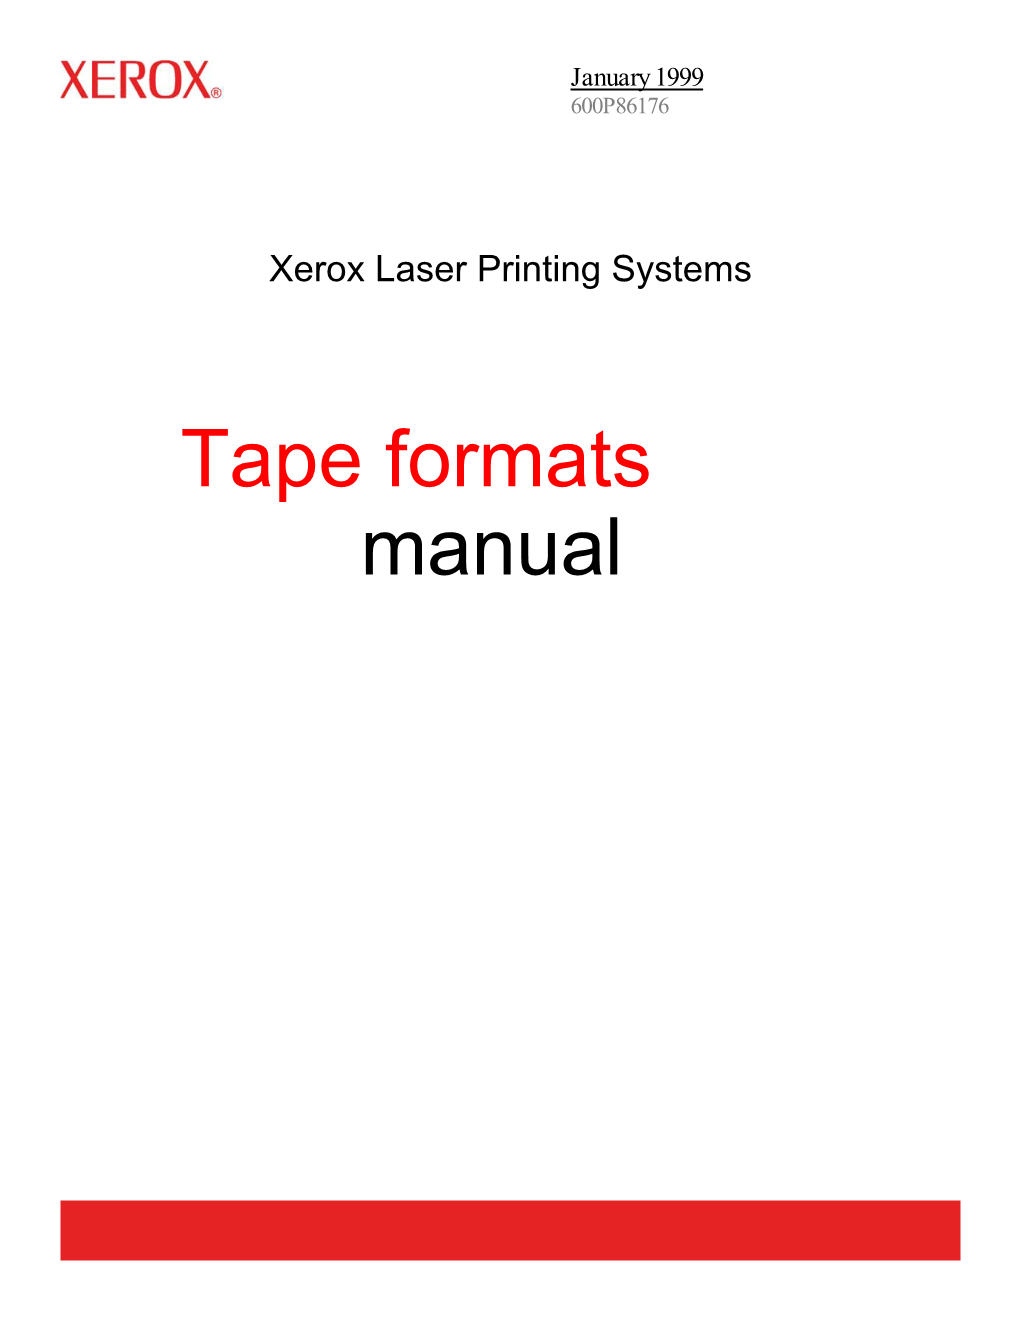 Tape Formats Manual